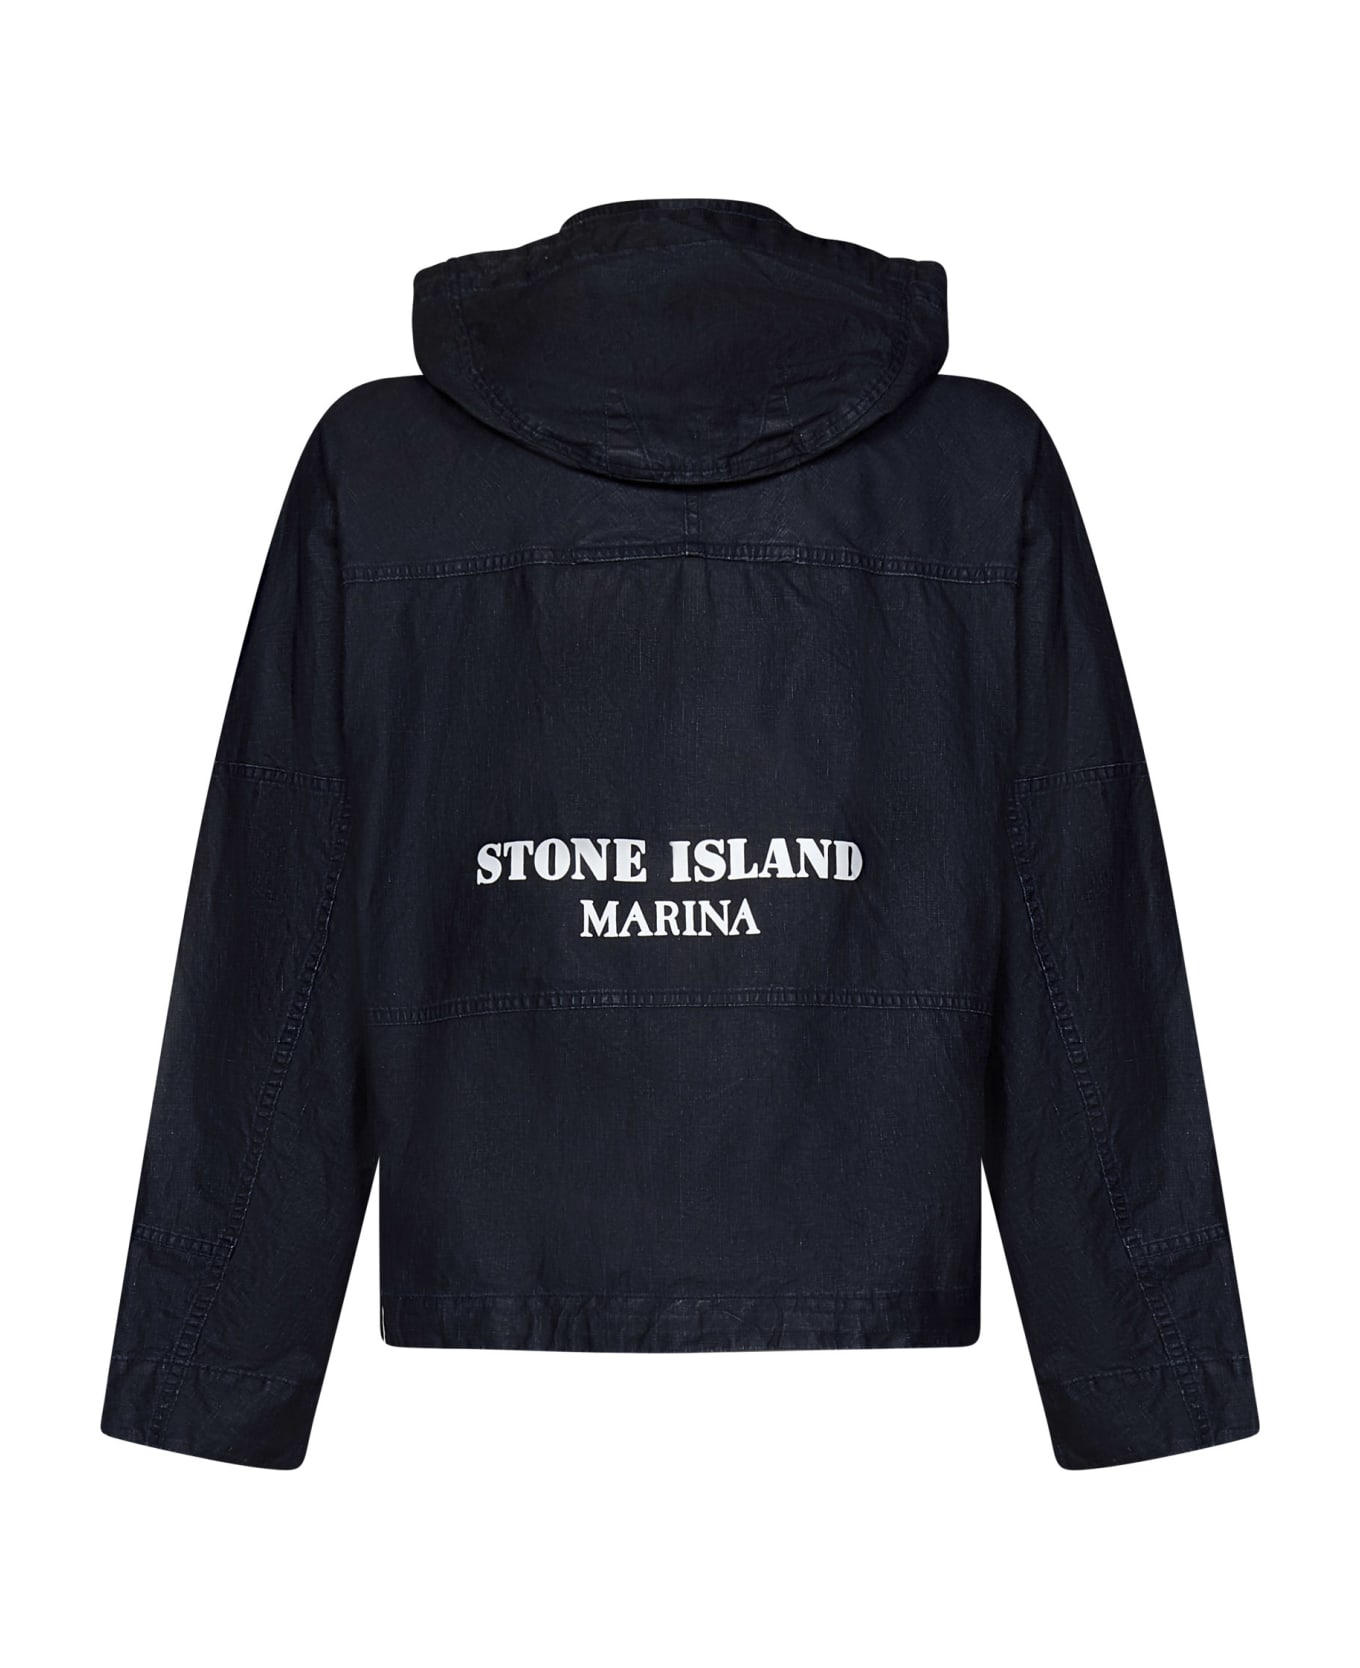 Stone Island Marina_raw Jacket - DENIM SCURO ジャケット